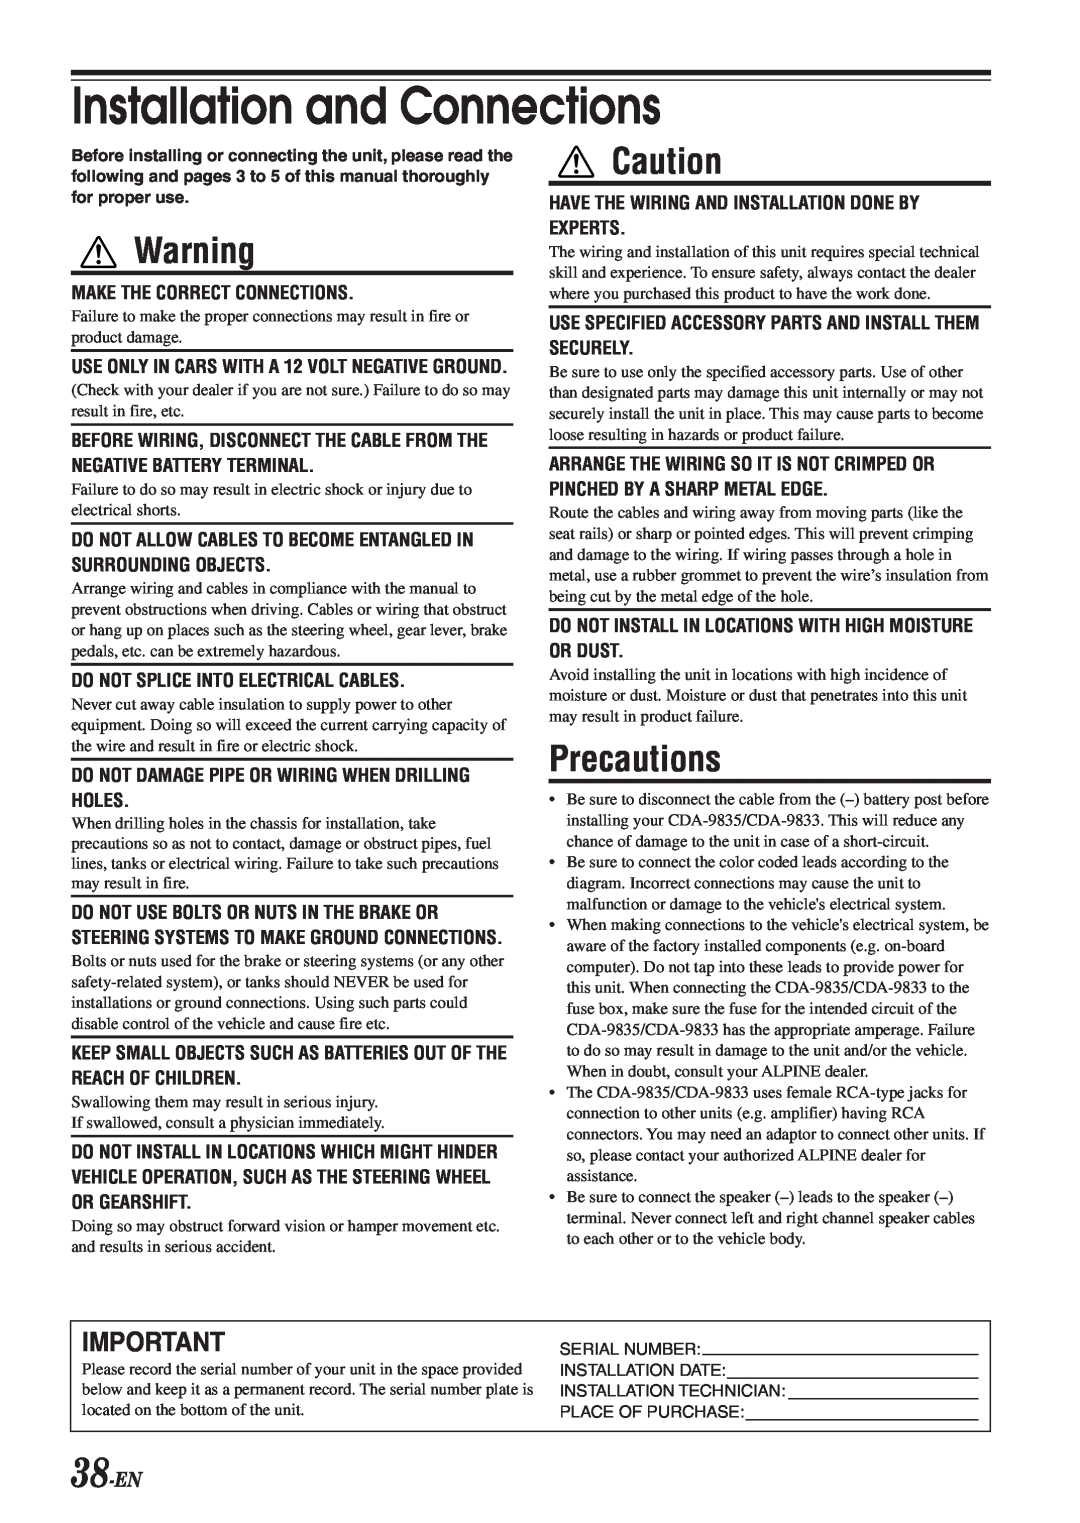 Alpine CDA-9833 owner manual Precautions, 38-EN, Installation and Connections 